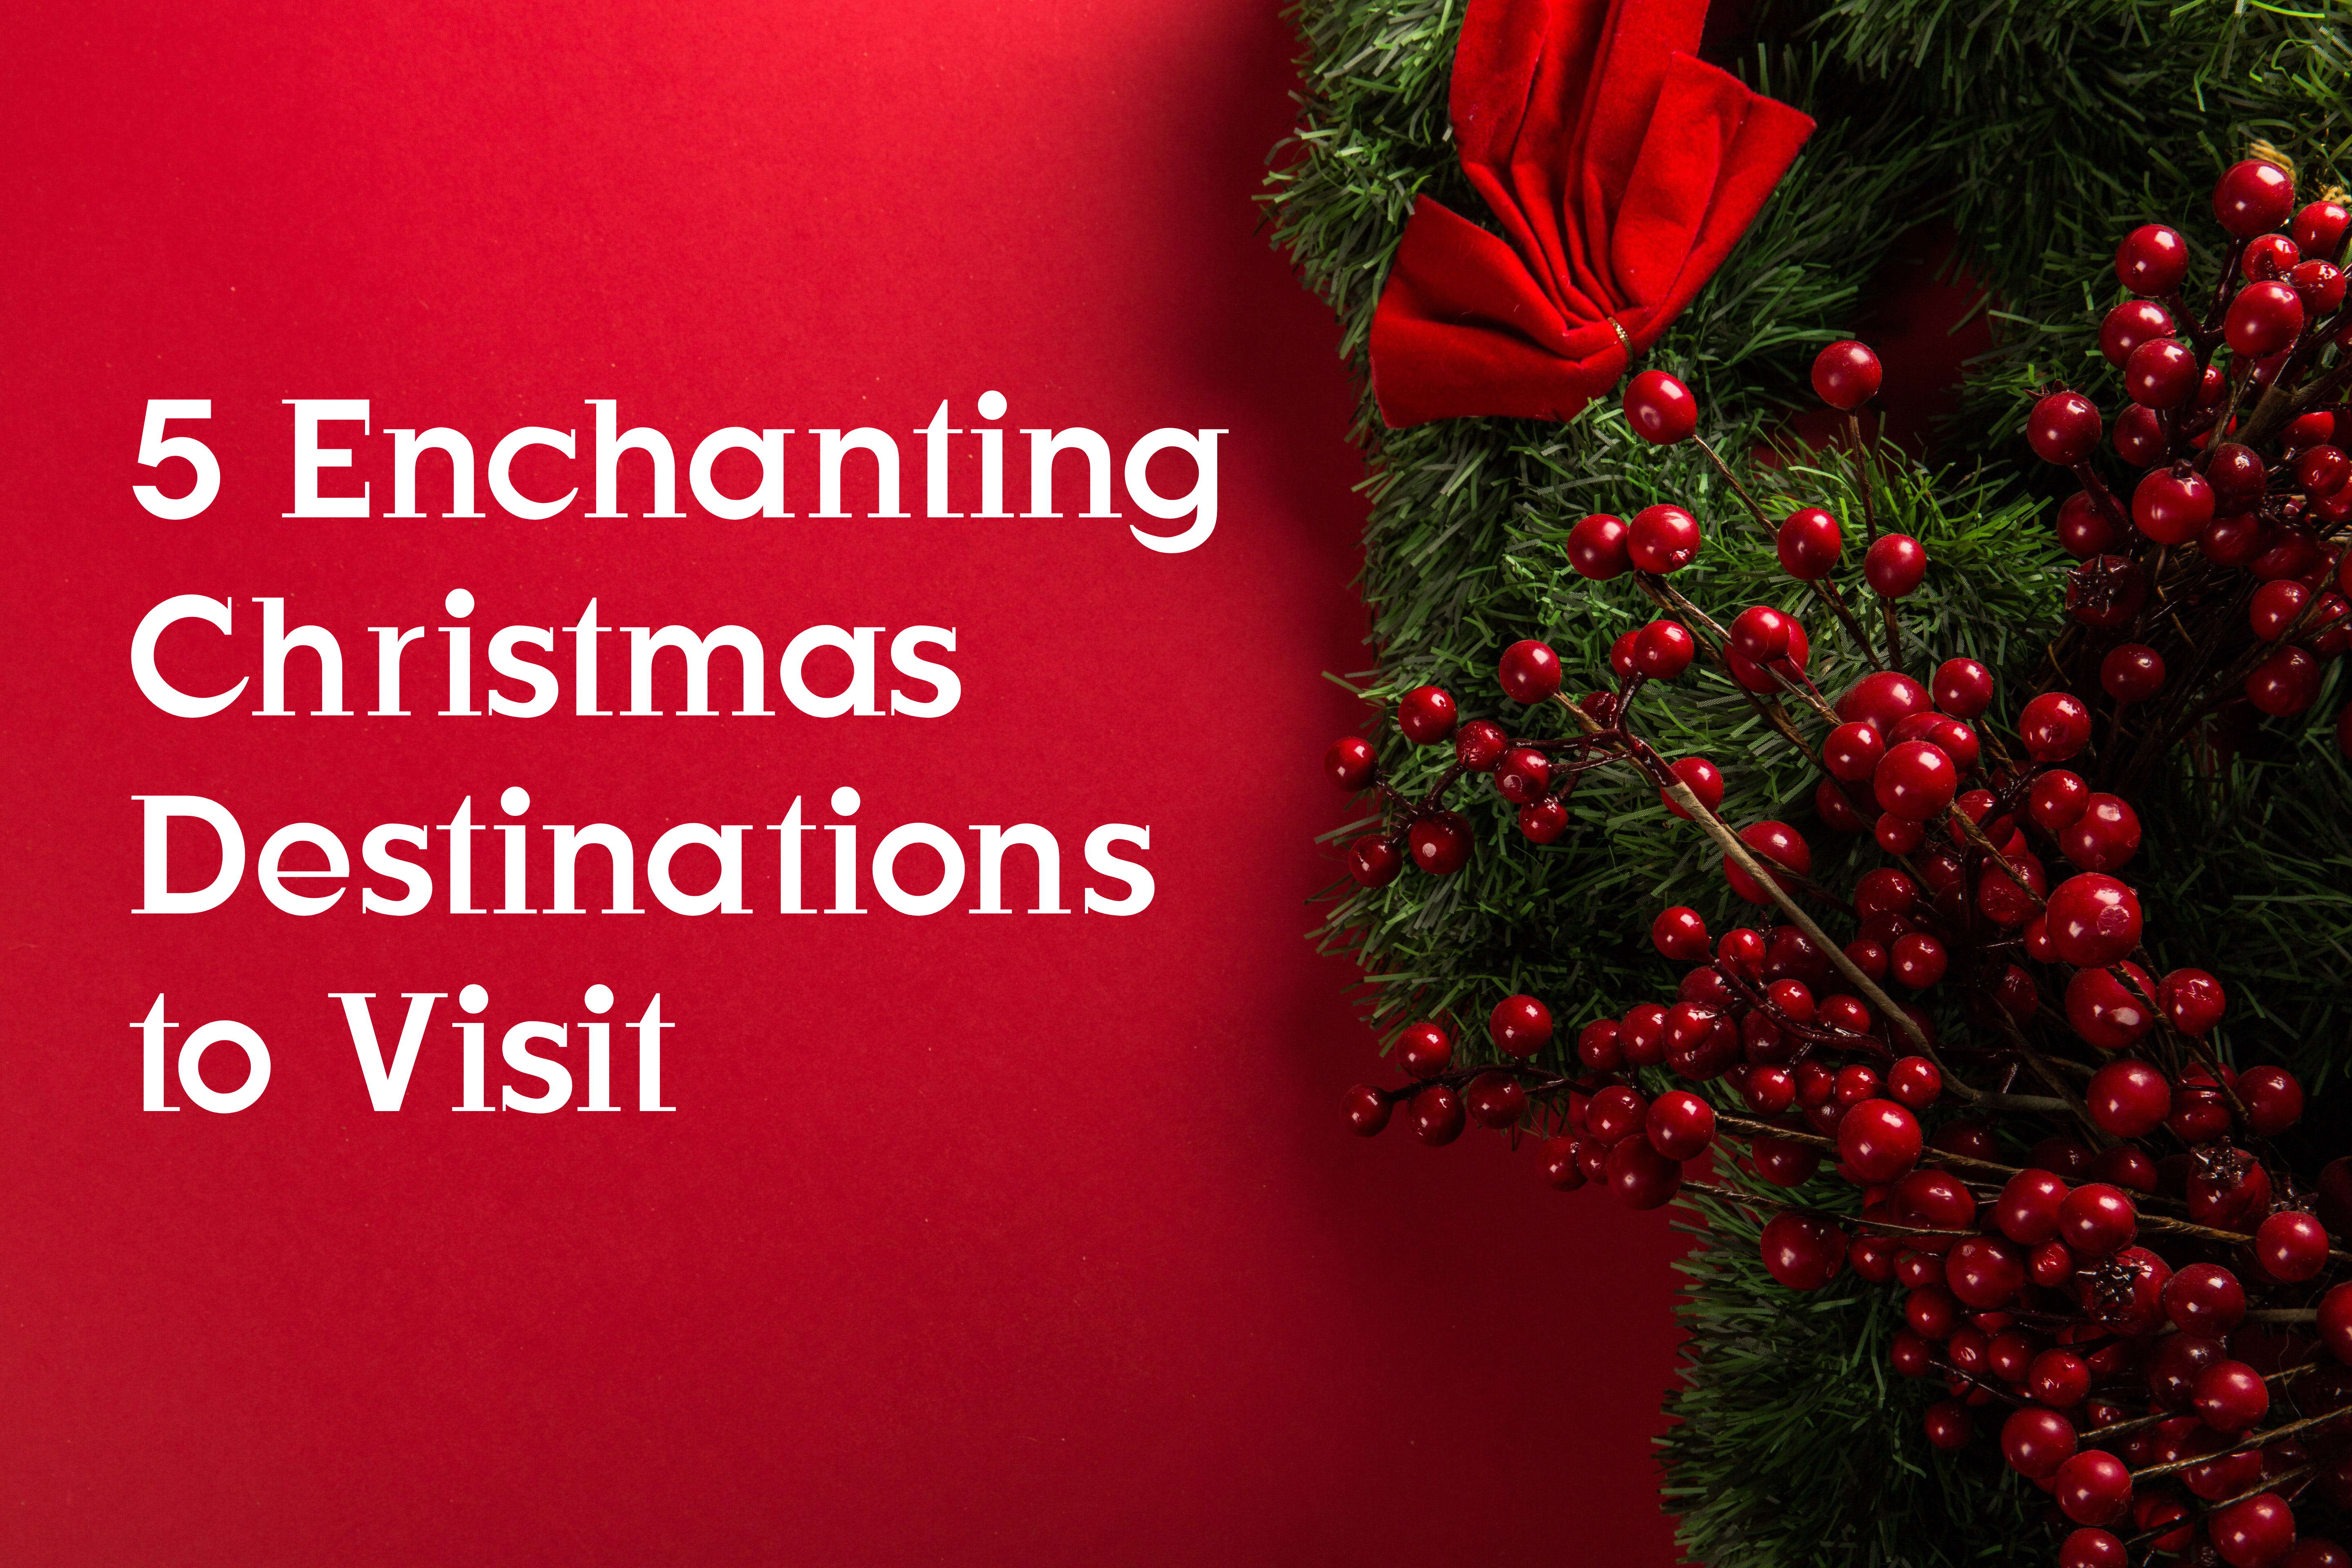 5 Enchanting Christmas Destinations to Visit